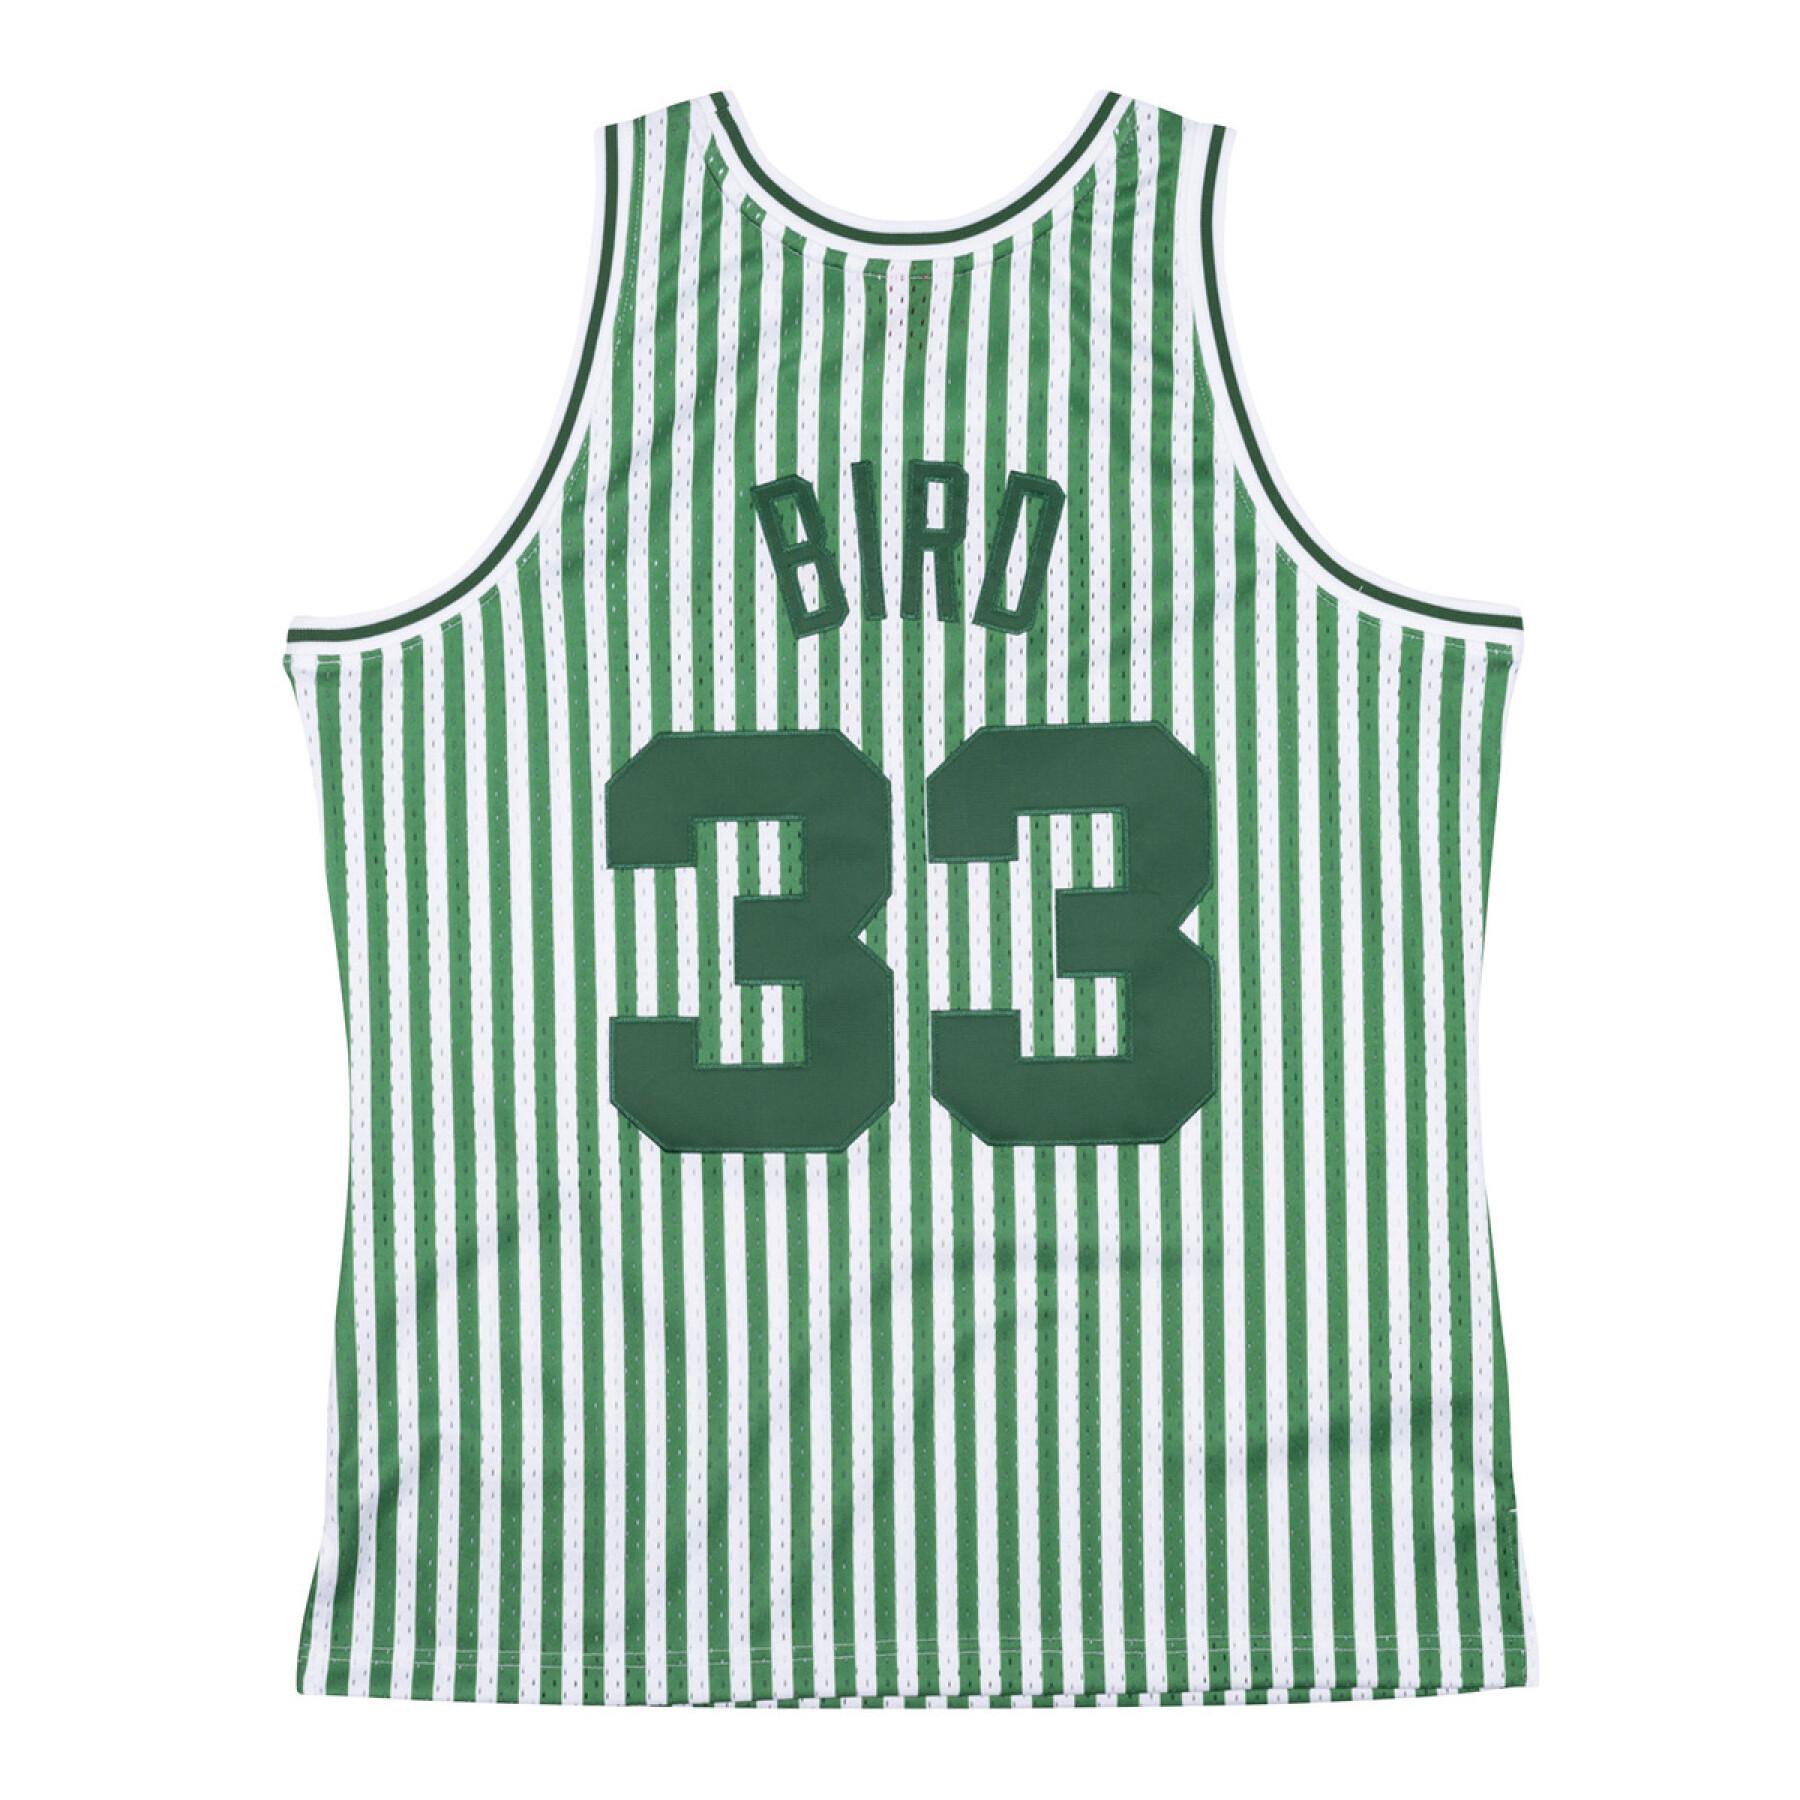 Jersey Boston Celtics striped